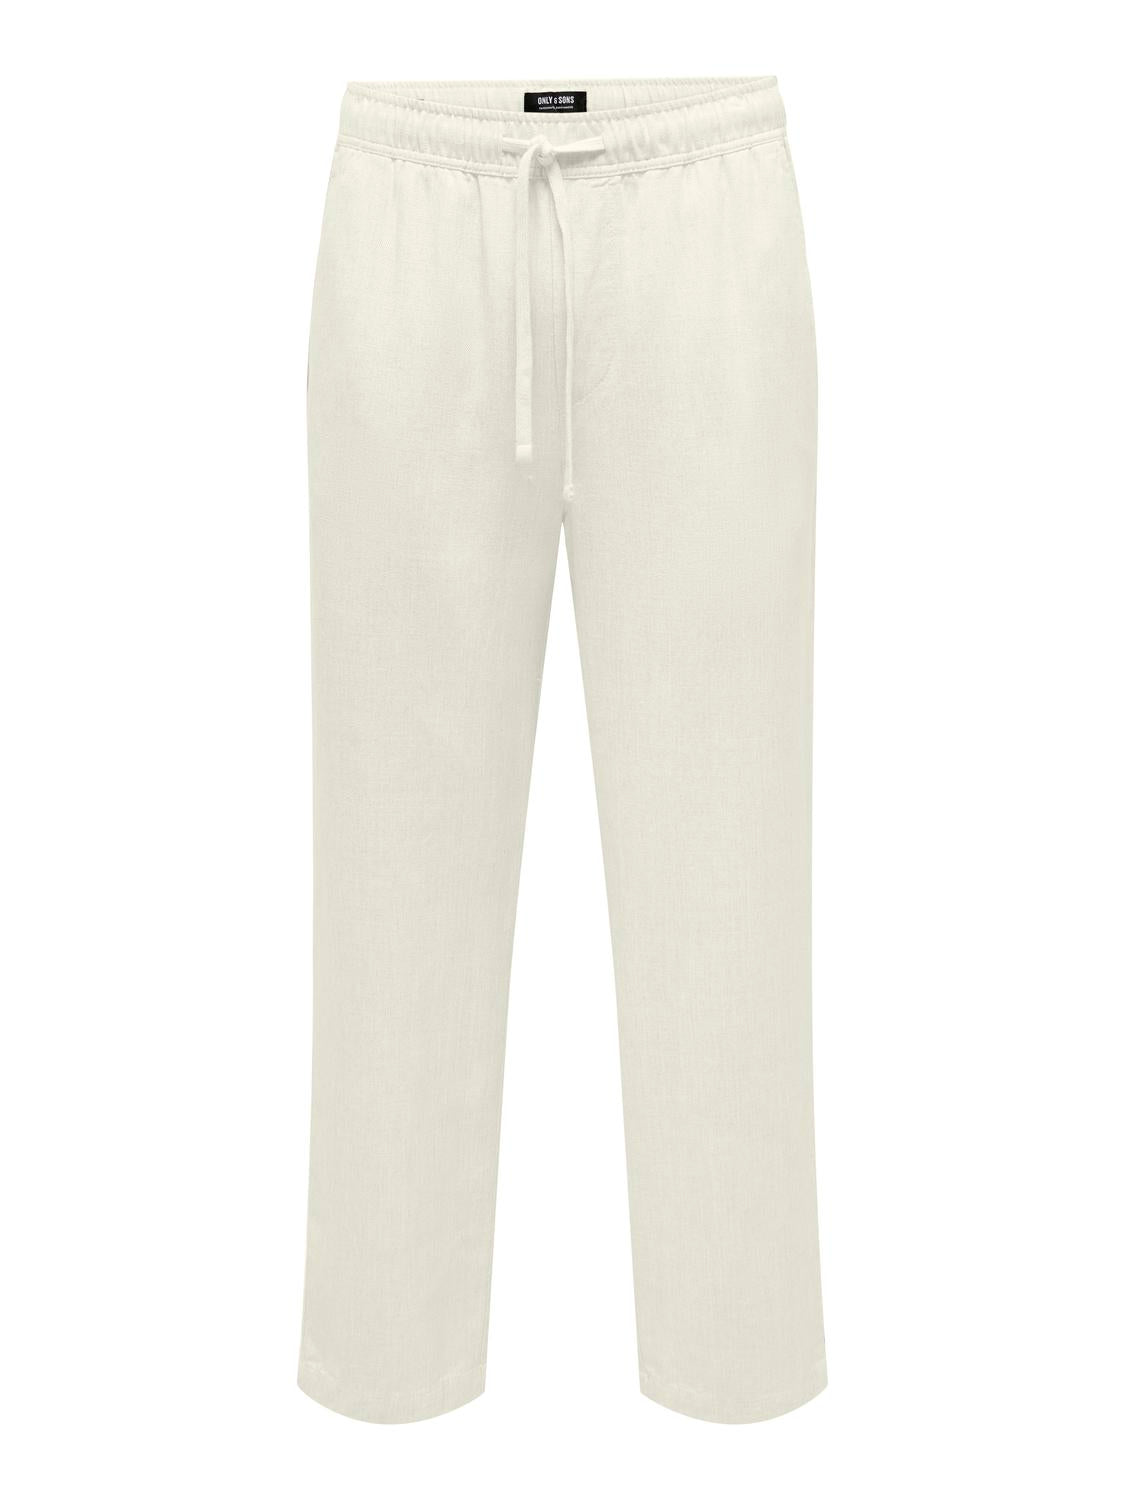 Sinus Loose Linen Pants - White